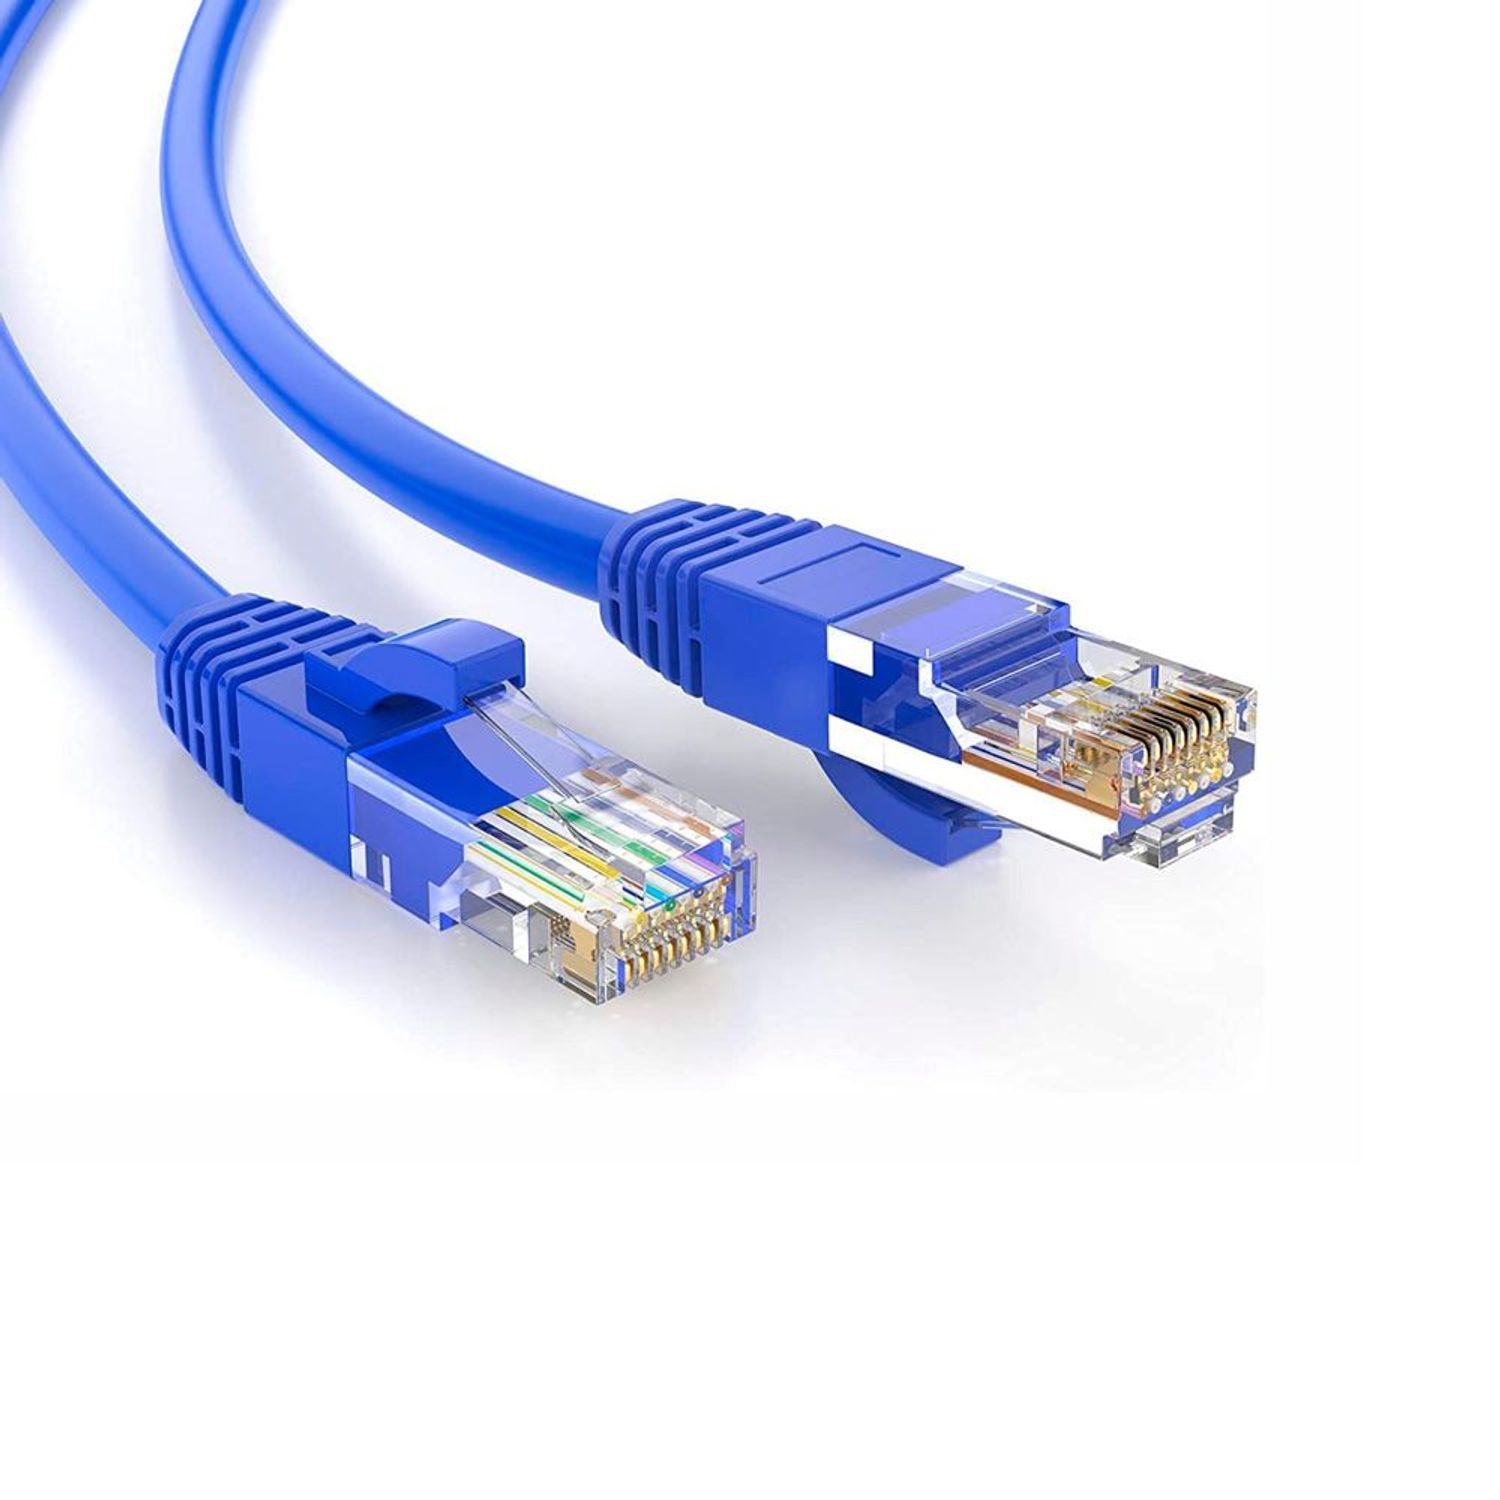 Cable de Red Utp Cat 5 Nuevo Sellado Testeado Rj45 15 Metros Azul - Promart